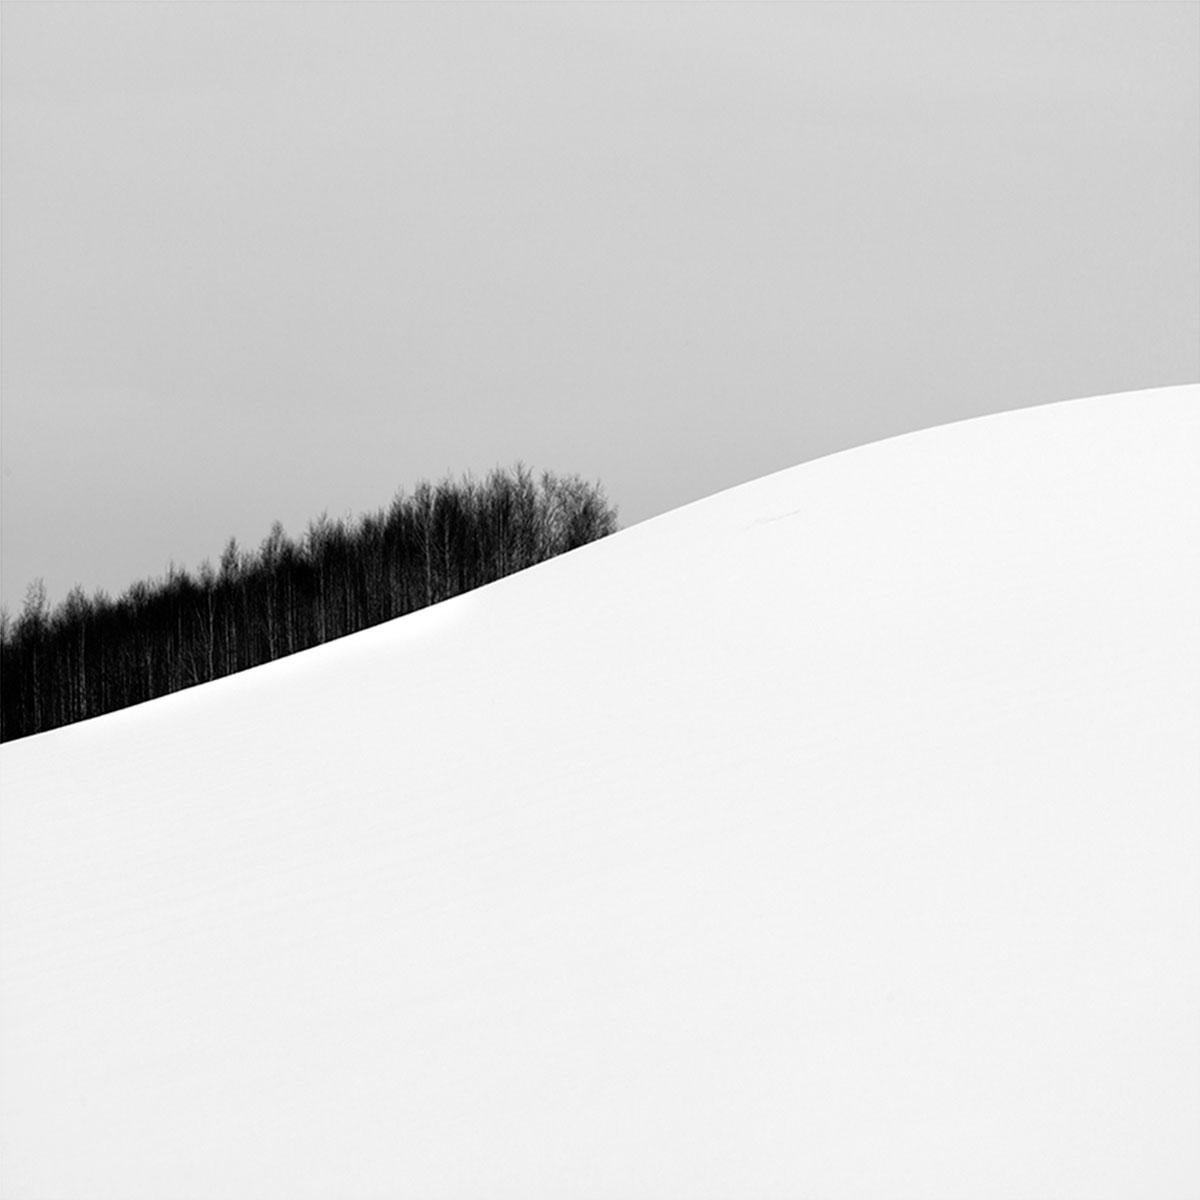 Eternal - BODY LANDSCAPE 3 by Alexandre Manuel (Black and white minimalist)